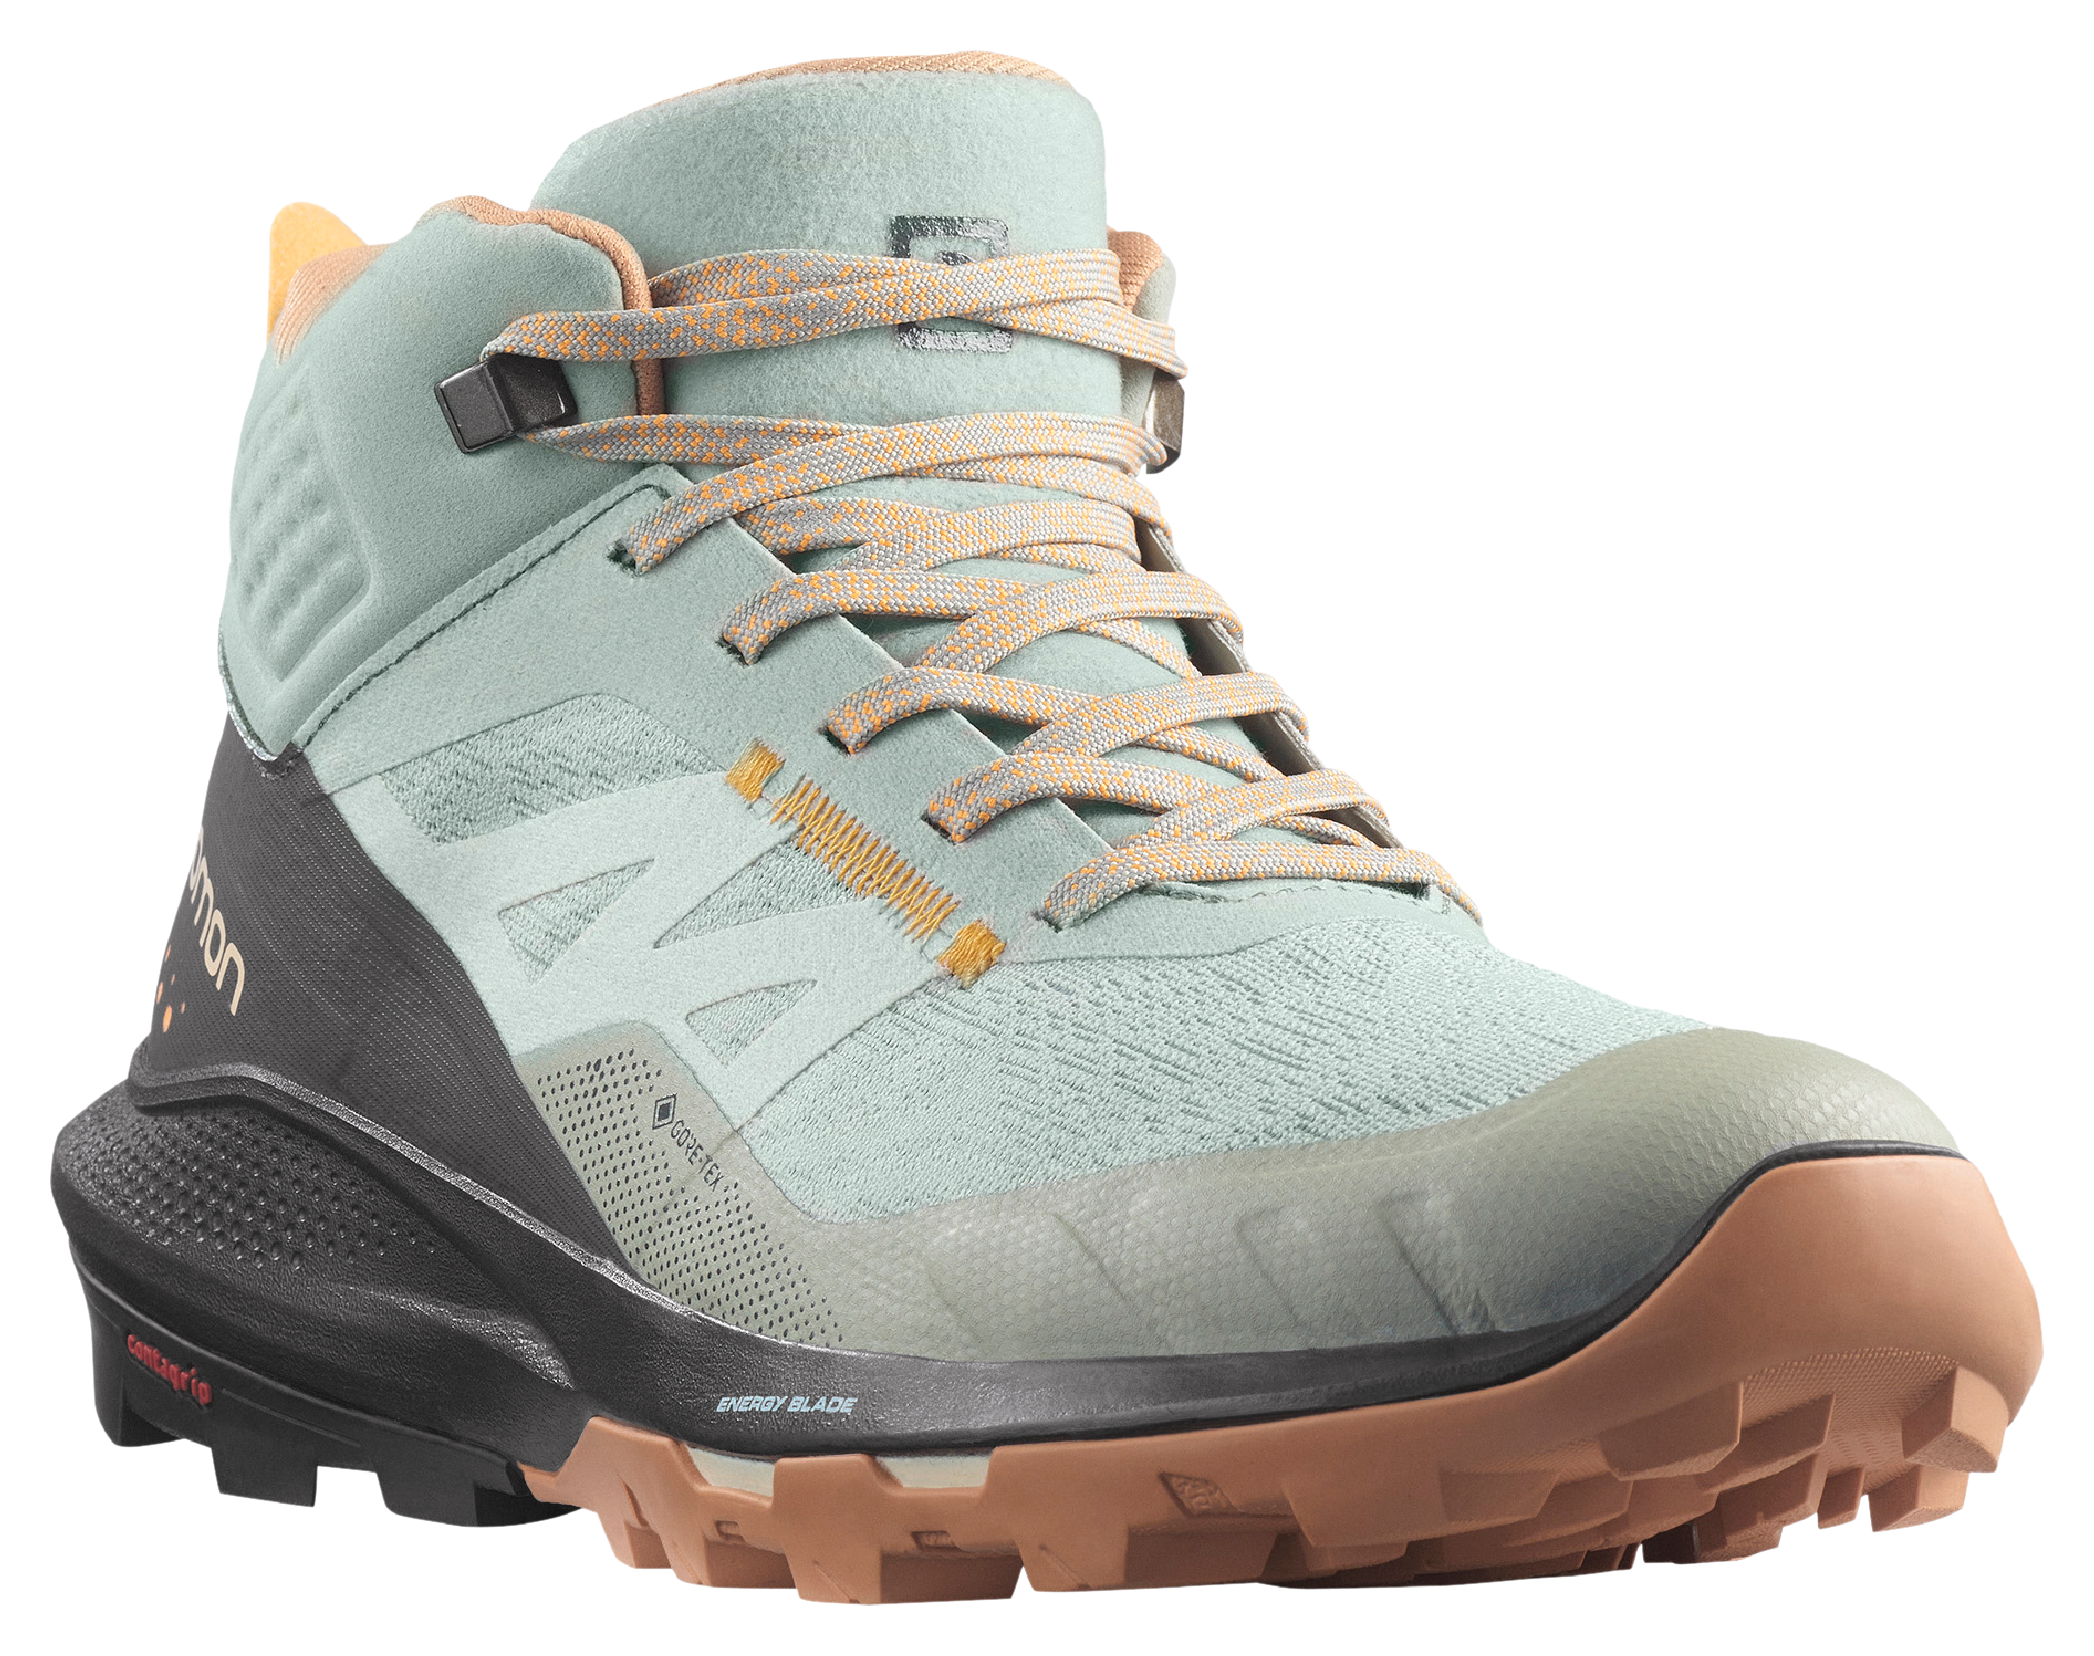 Salomon Outpulse Mid GORE-TEX Hiking Boots for Ladies - Wrought Iron/Ebony/Blaze Orange - 11M